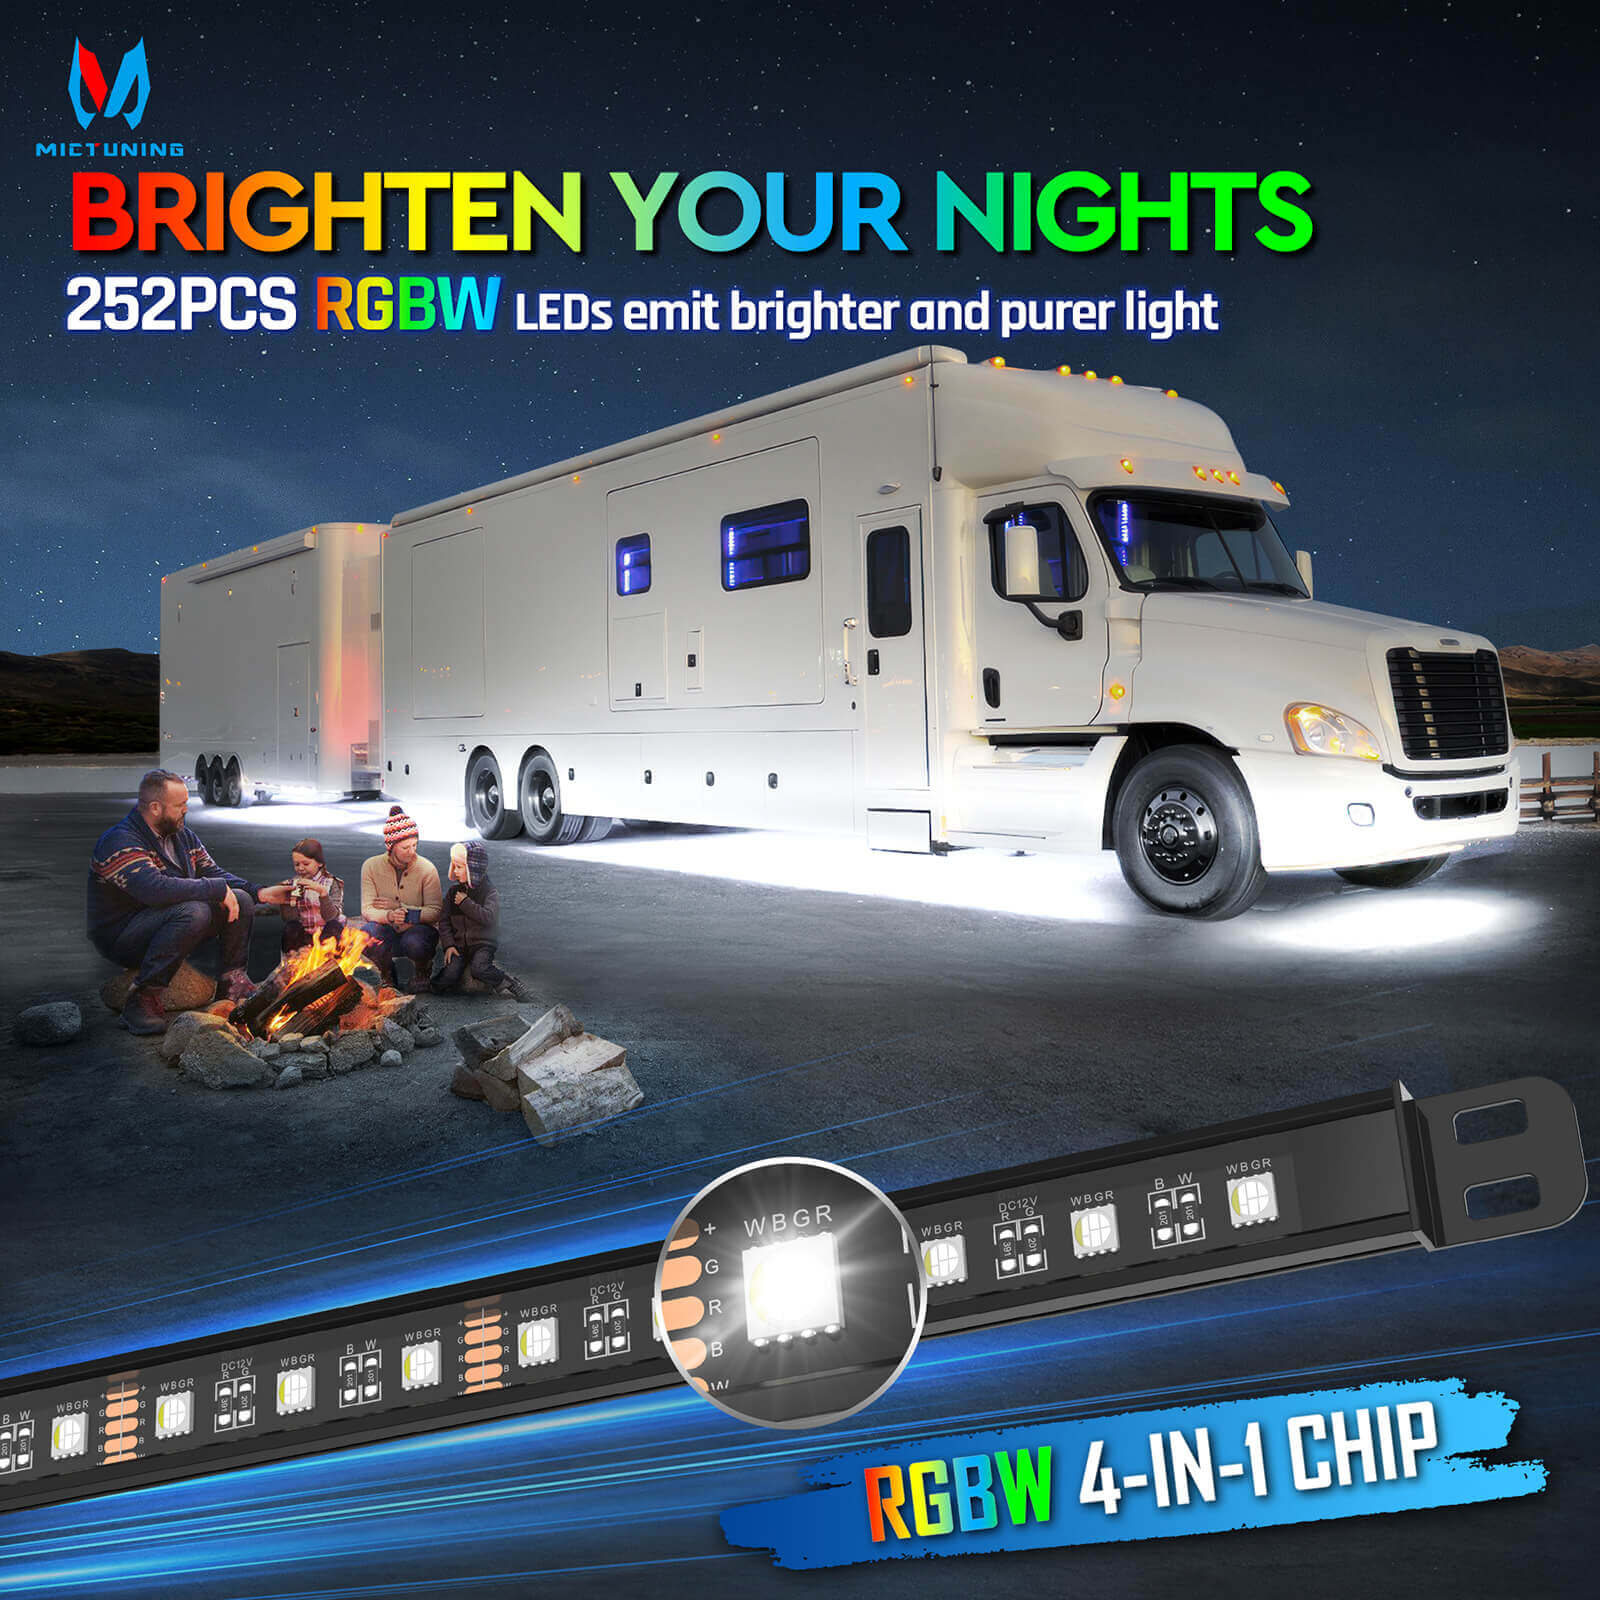 N8 RGBW Underglow Light Bars(RV Version), App/Remote Control, w/ 2pcs 11.4ft Extension Cords